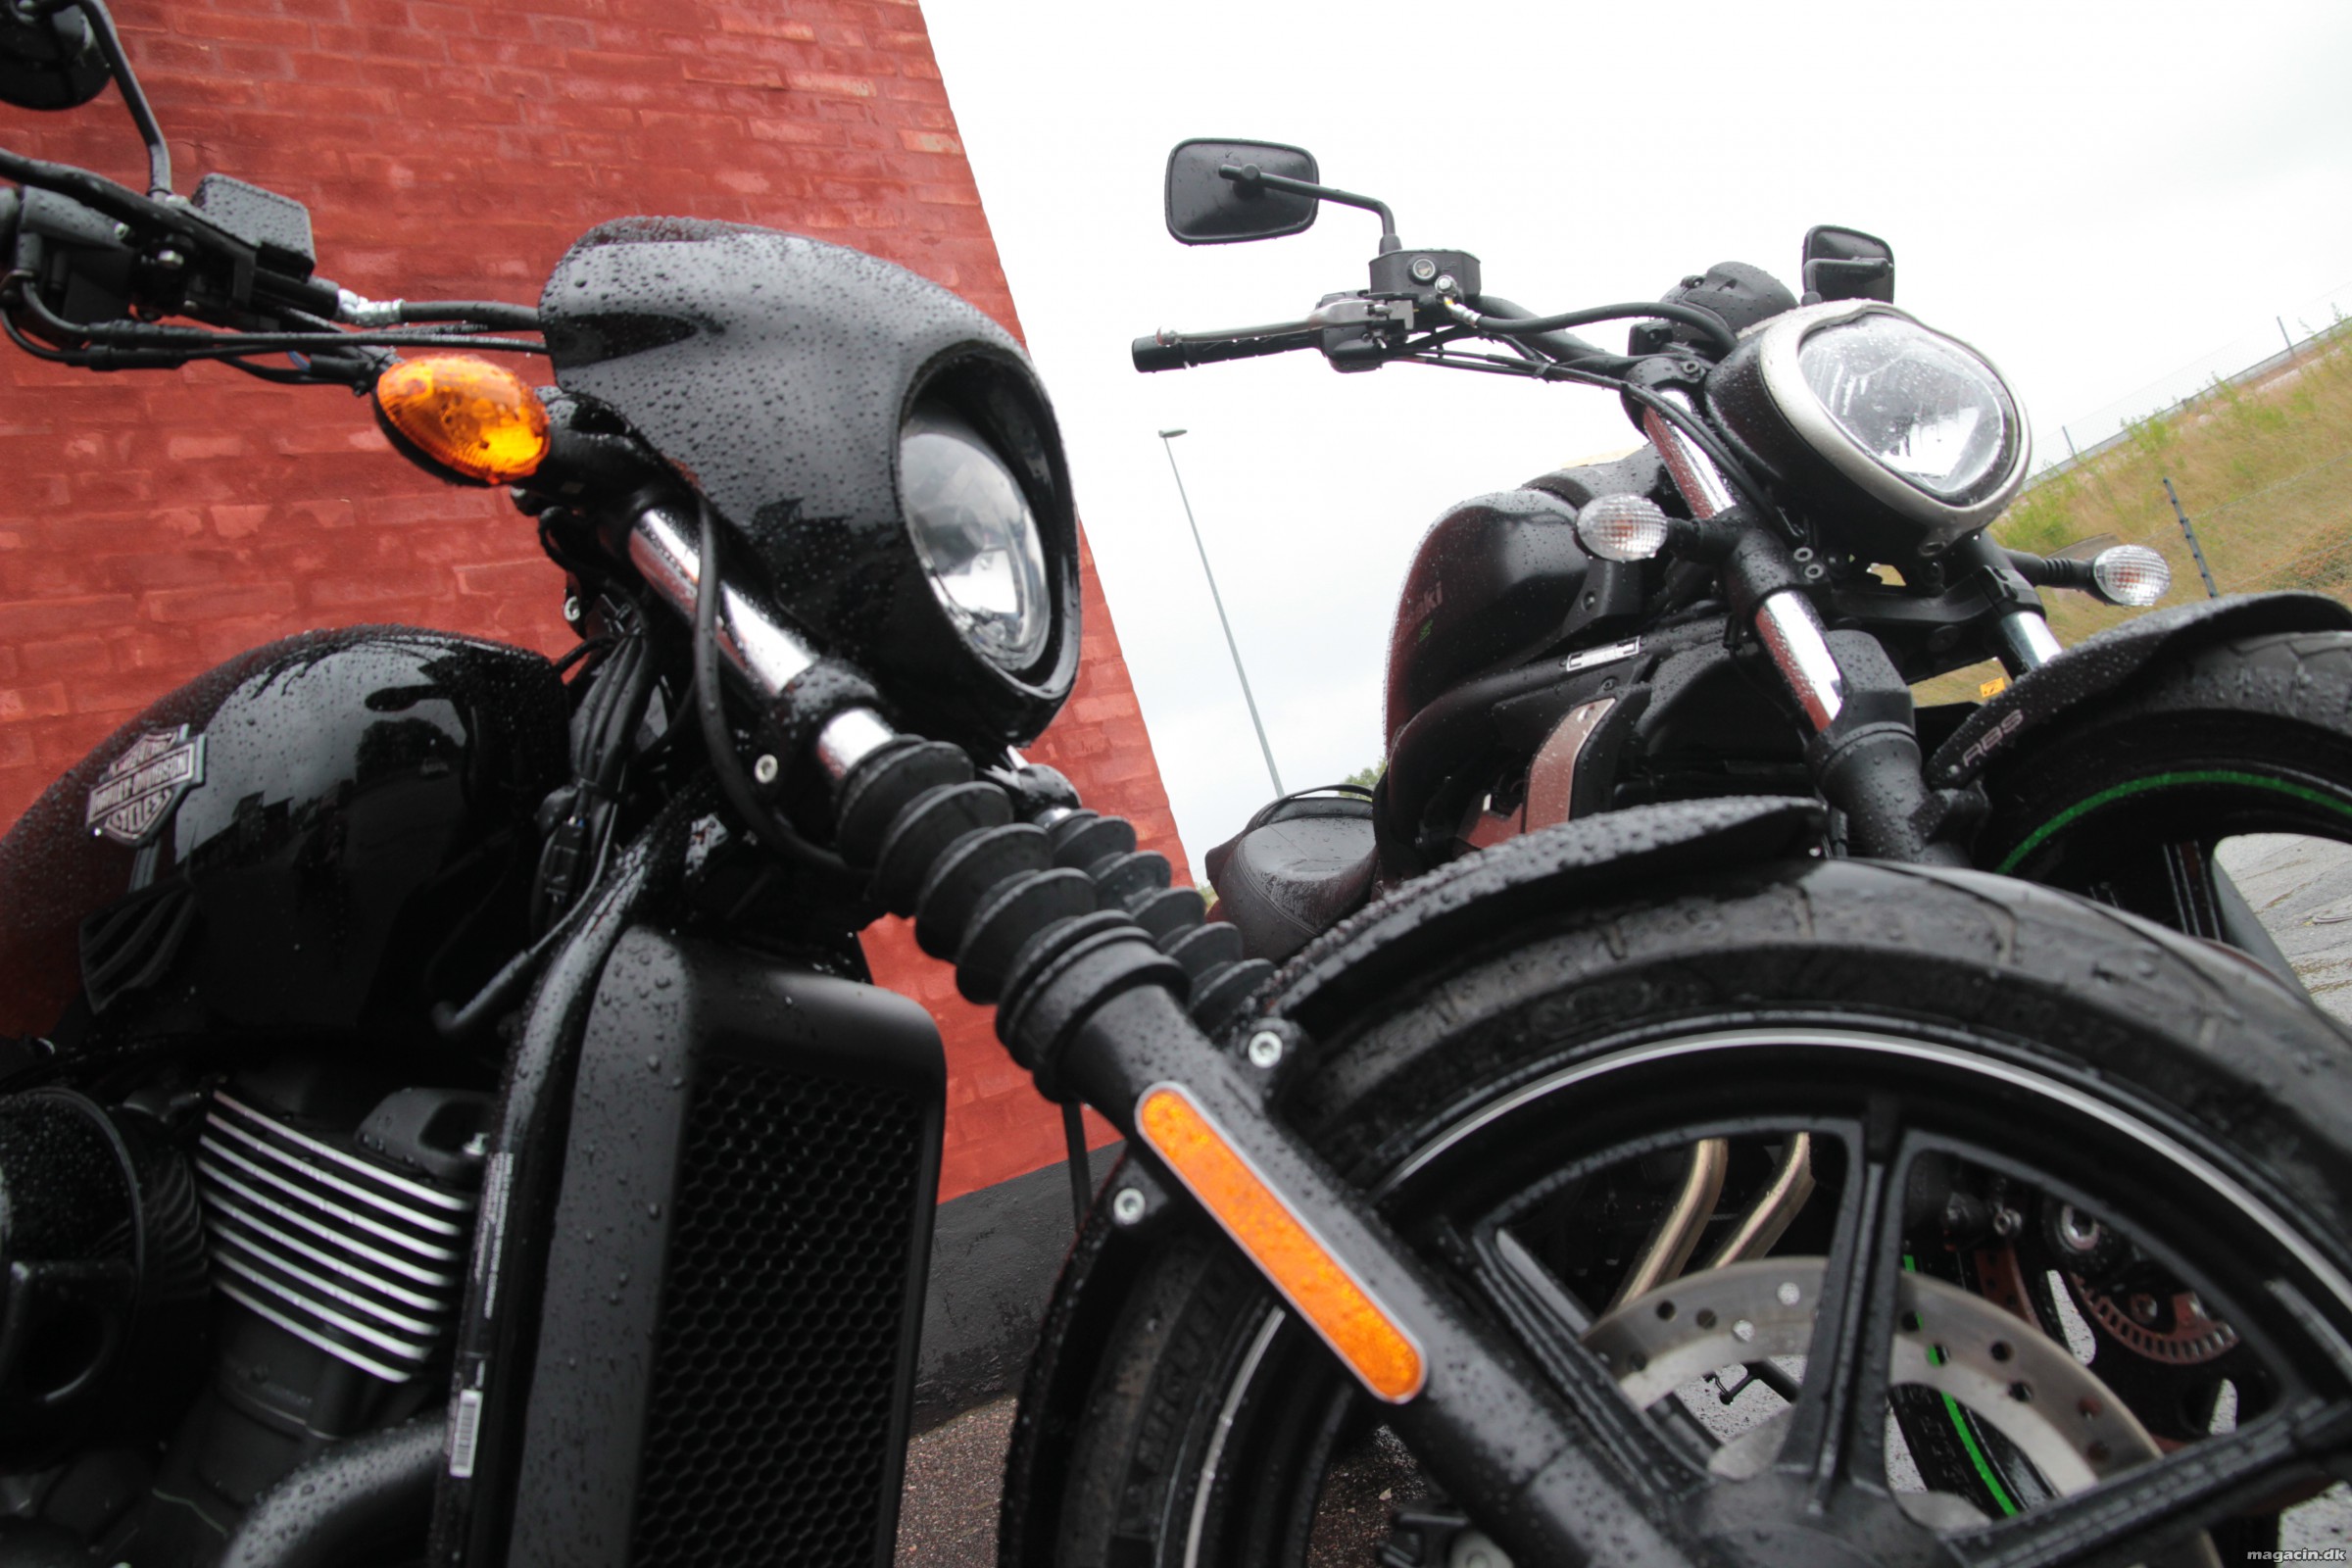 Test: 2015 Kawasaki Vulcan 650 S vs. Harley-Davidson 750 Street – Japan mod Amerika